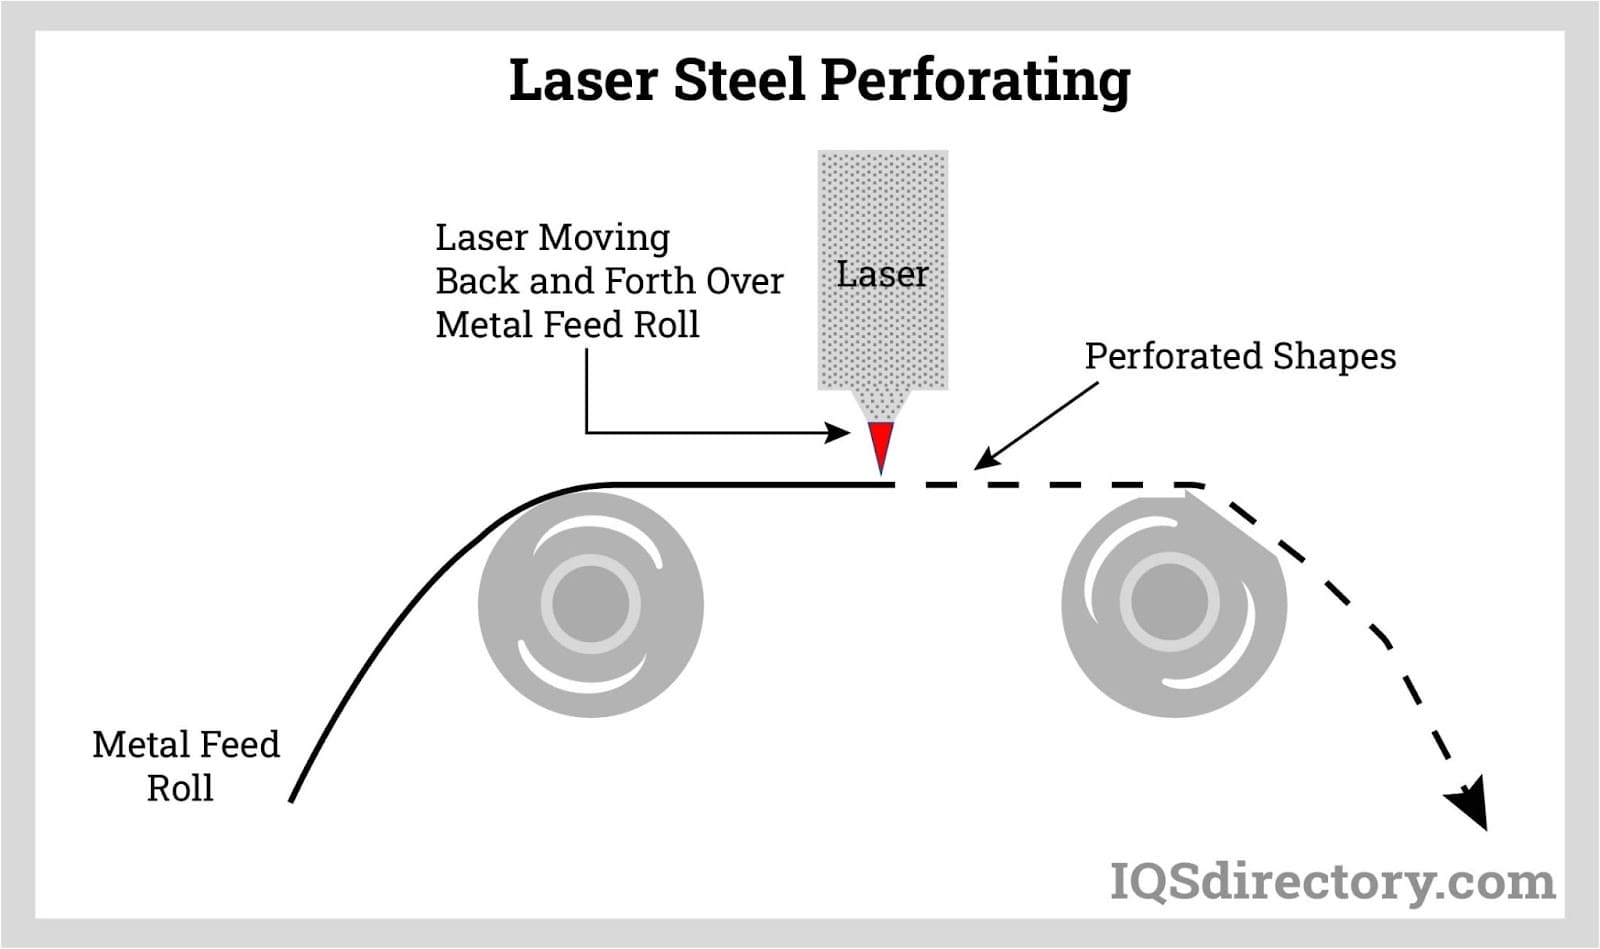 Laser Steel Perforating